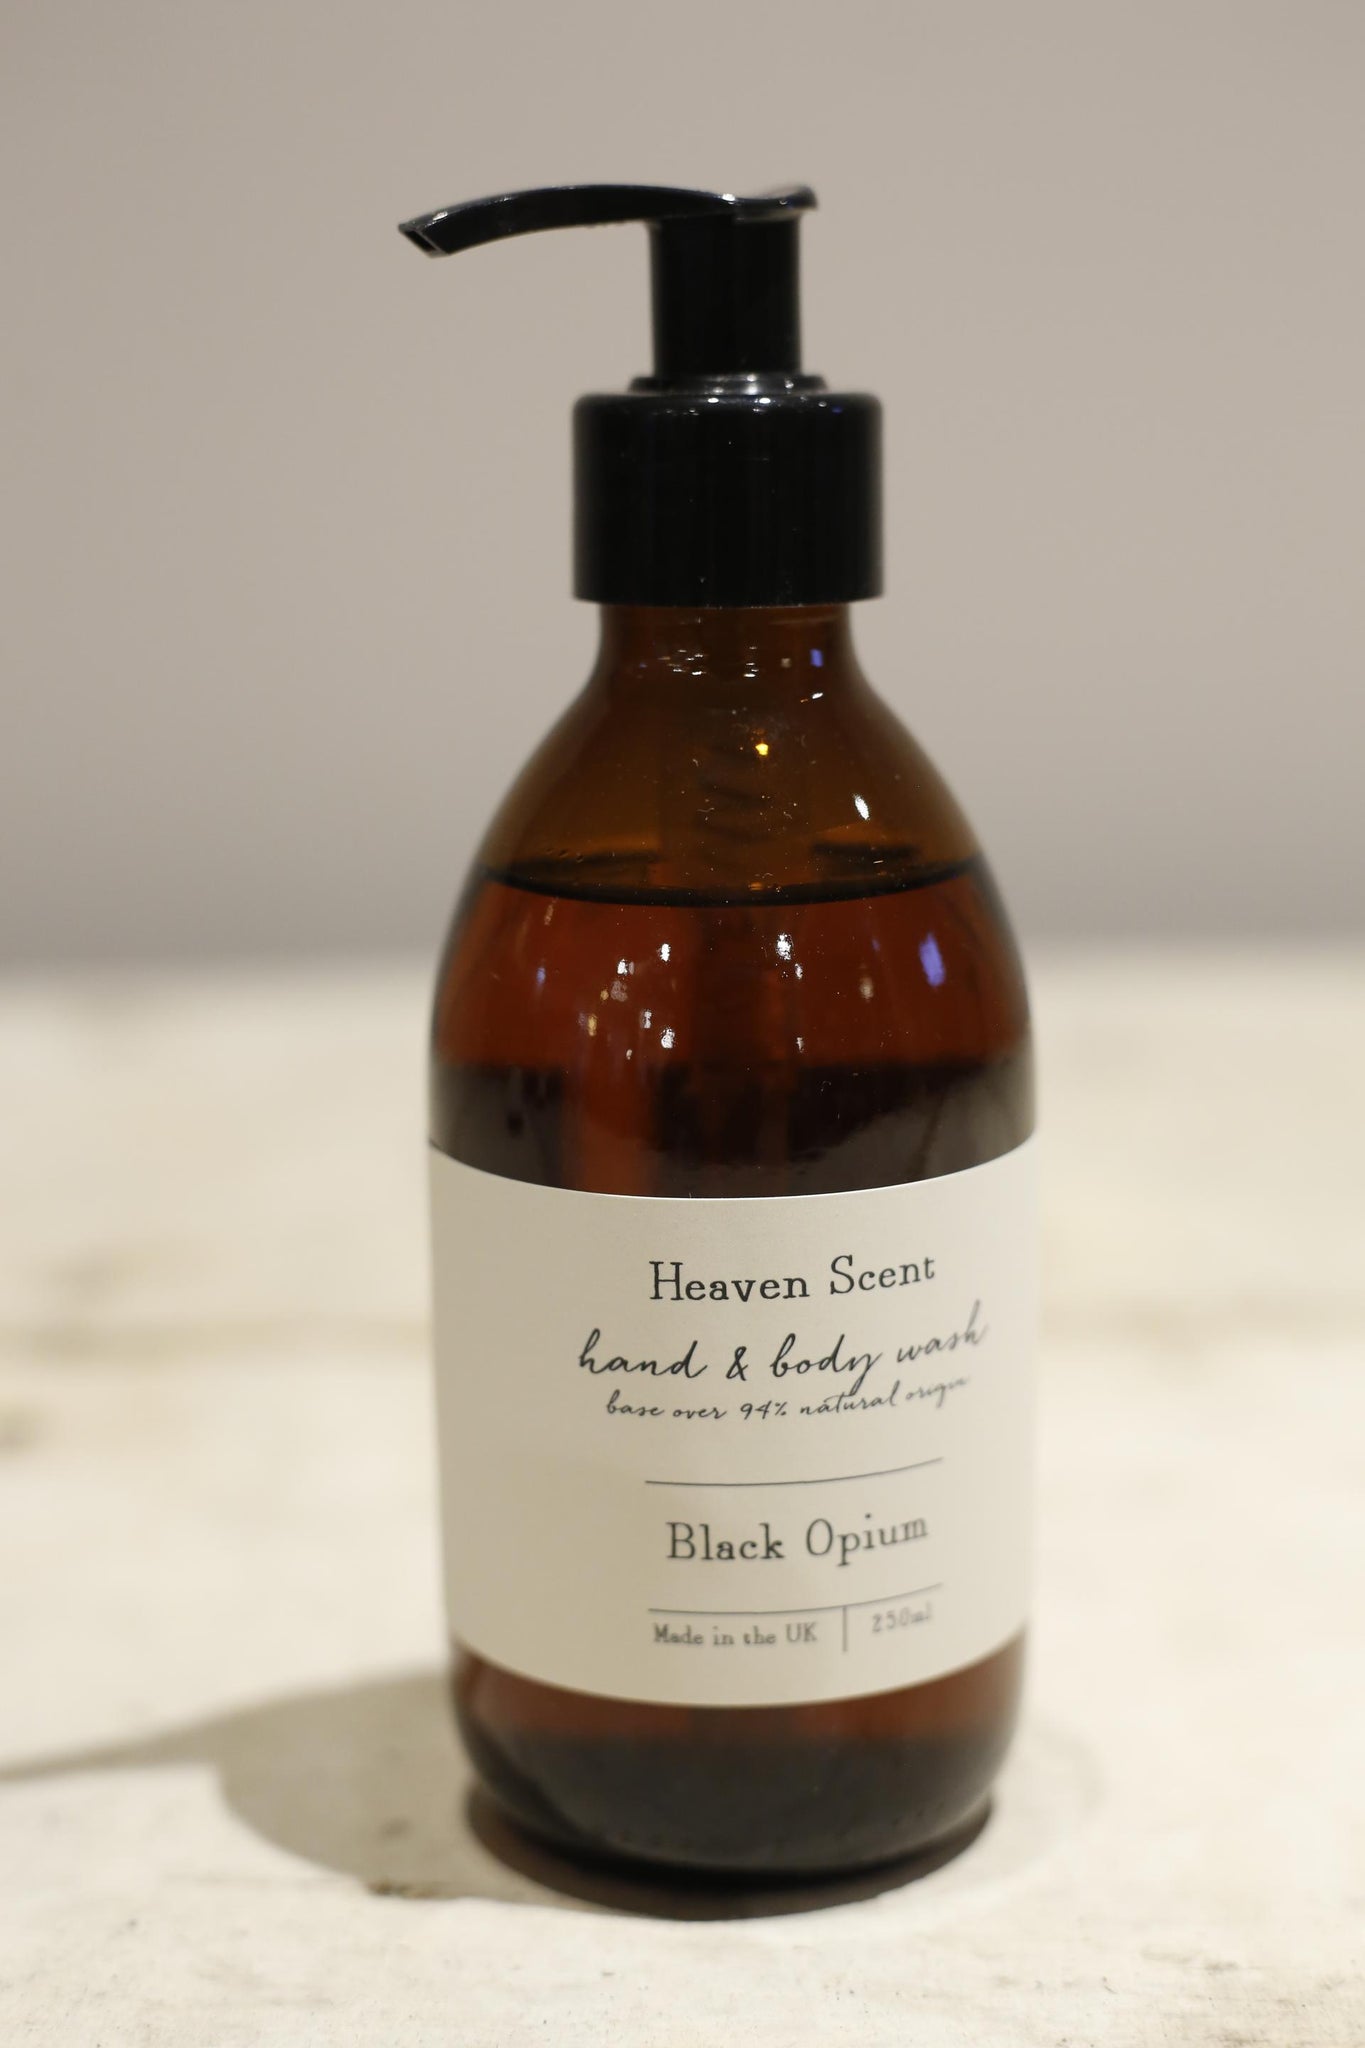 Heaven Scent hand & body wash - Black opium 250ml